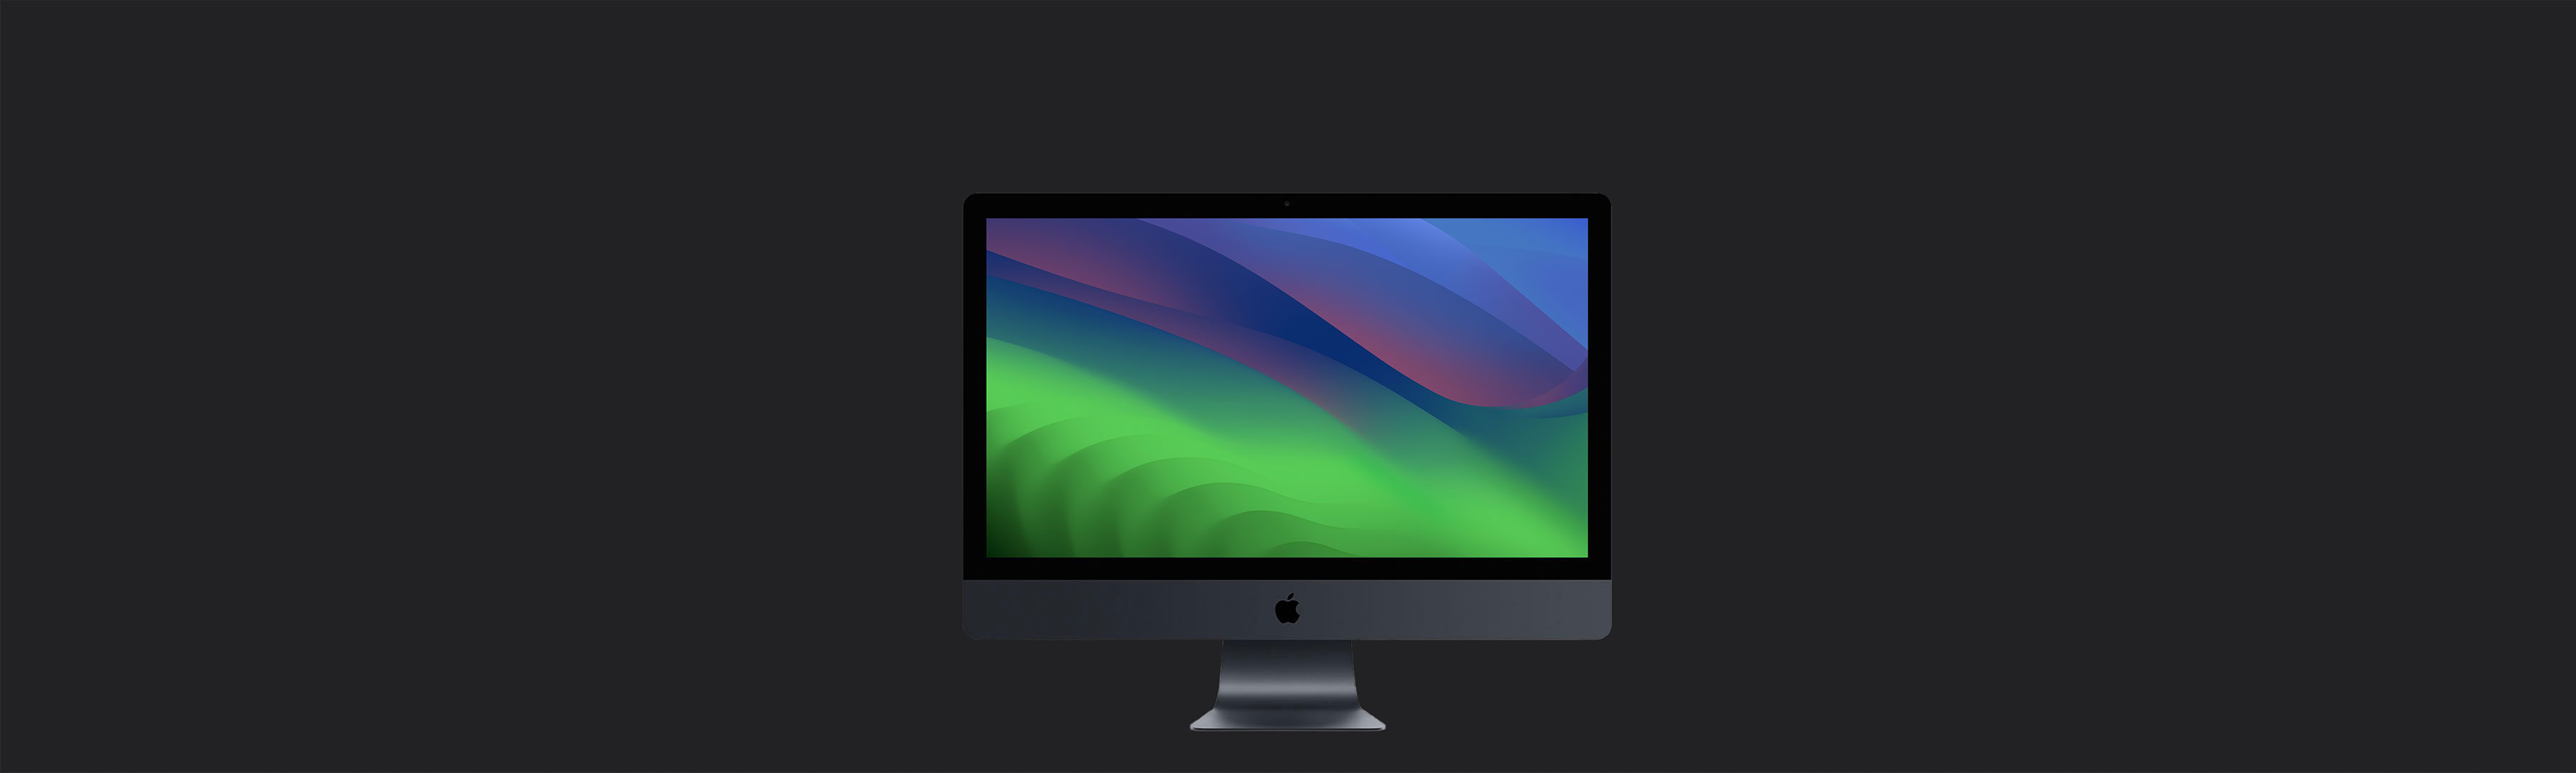 iMac Pro - Apple サポート (公式)